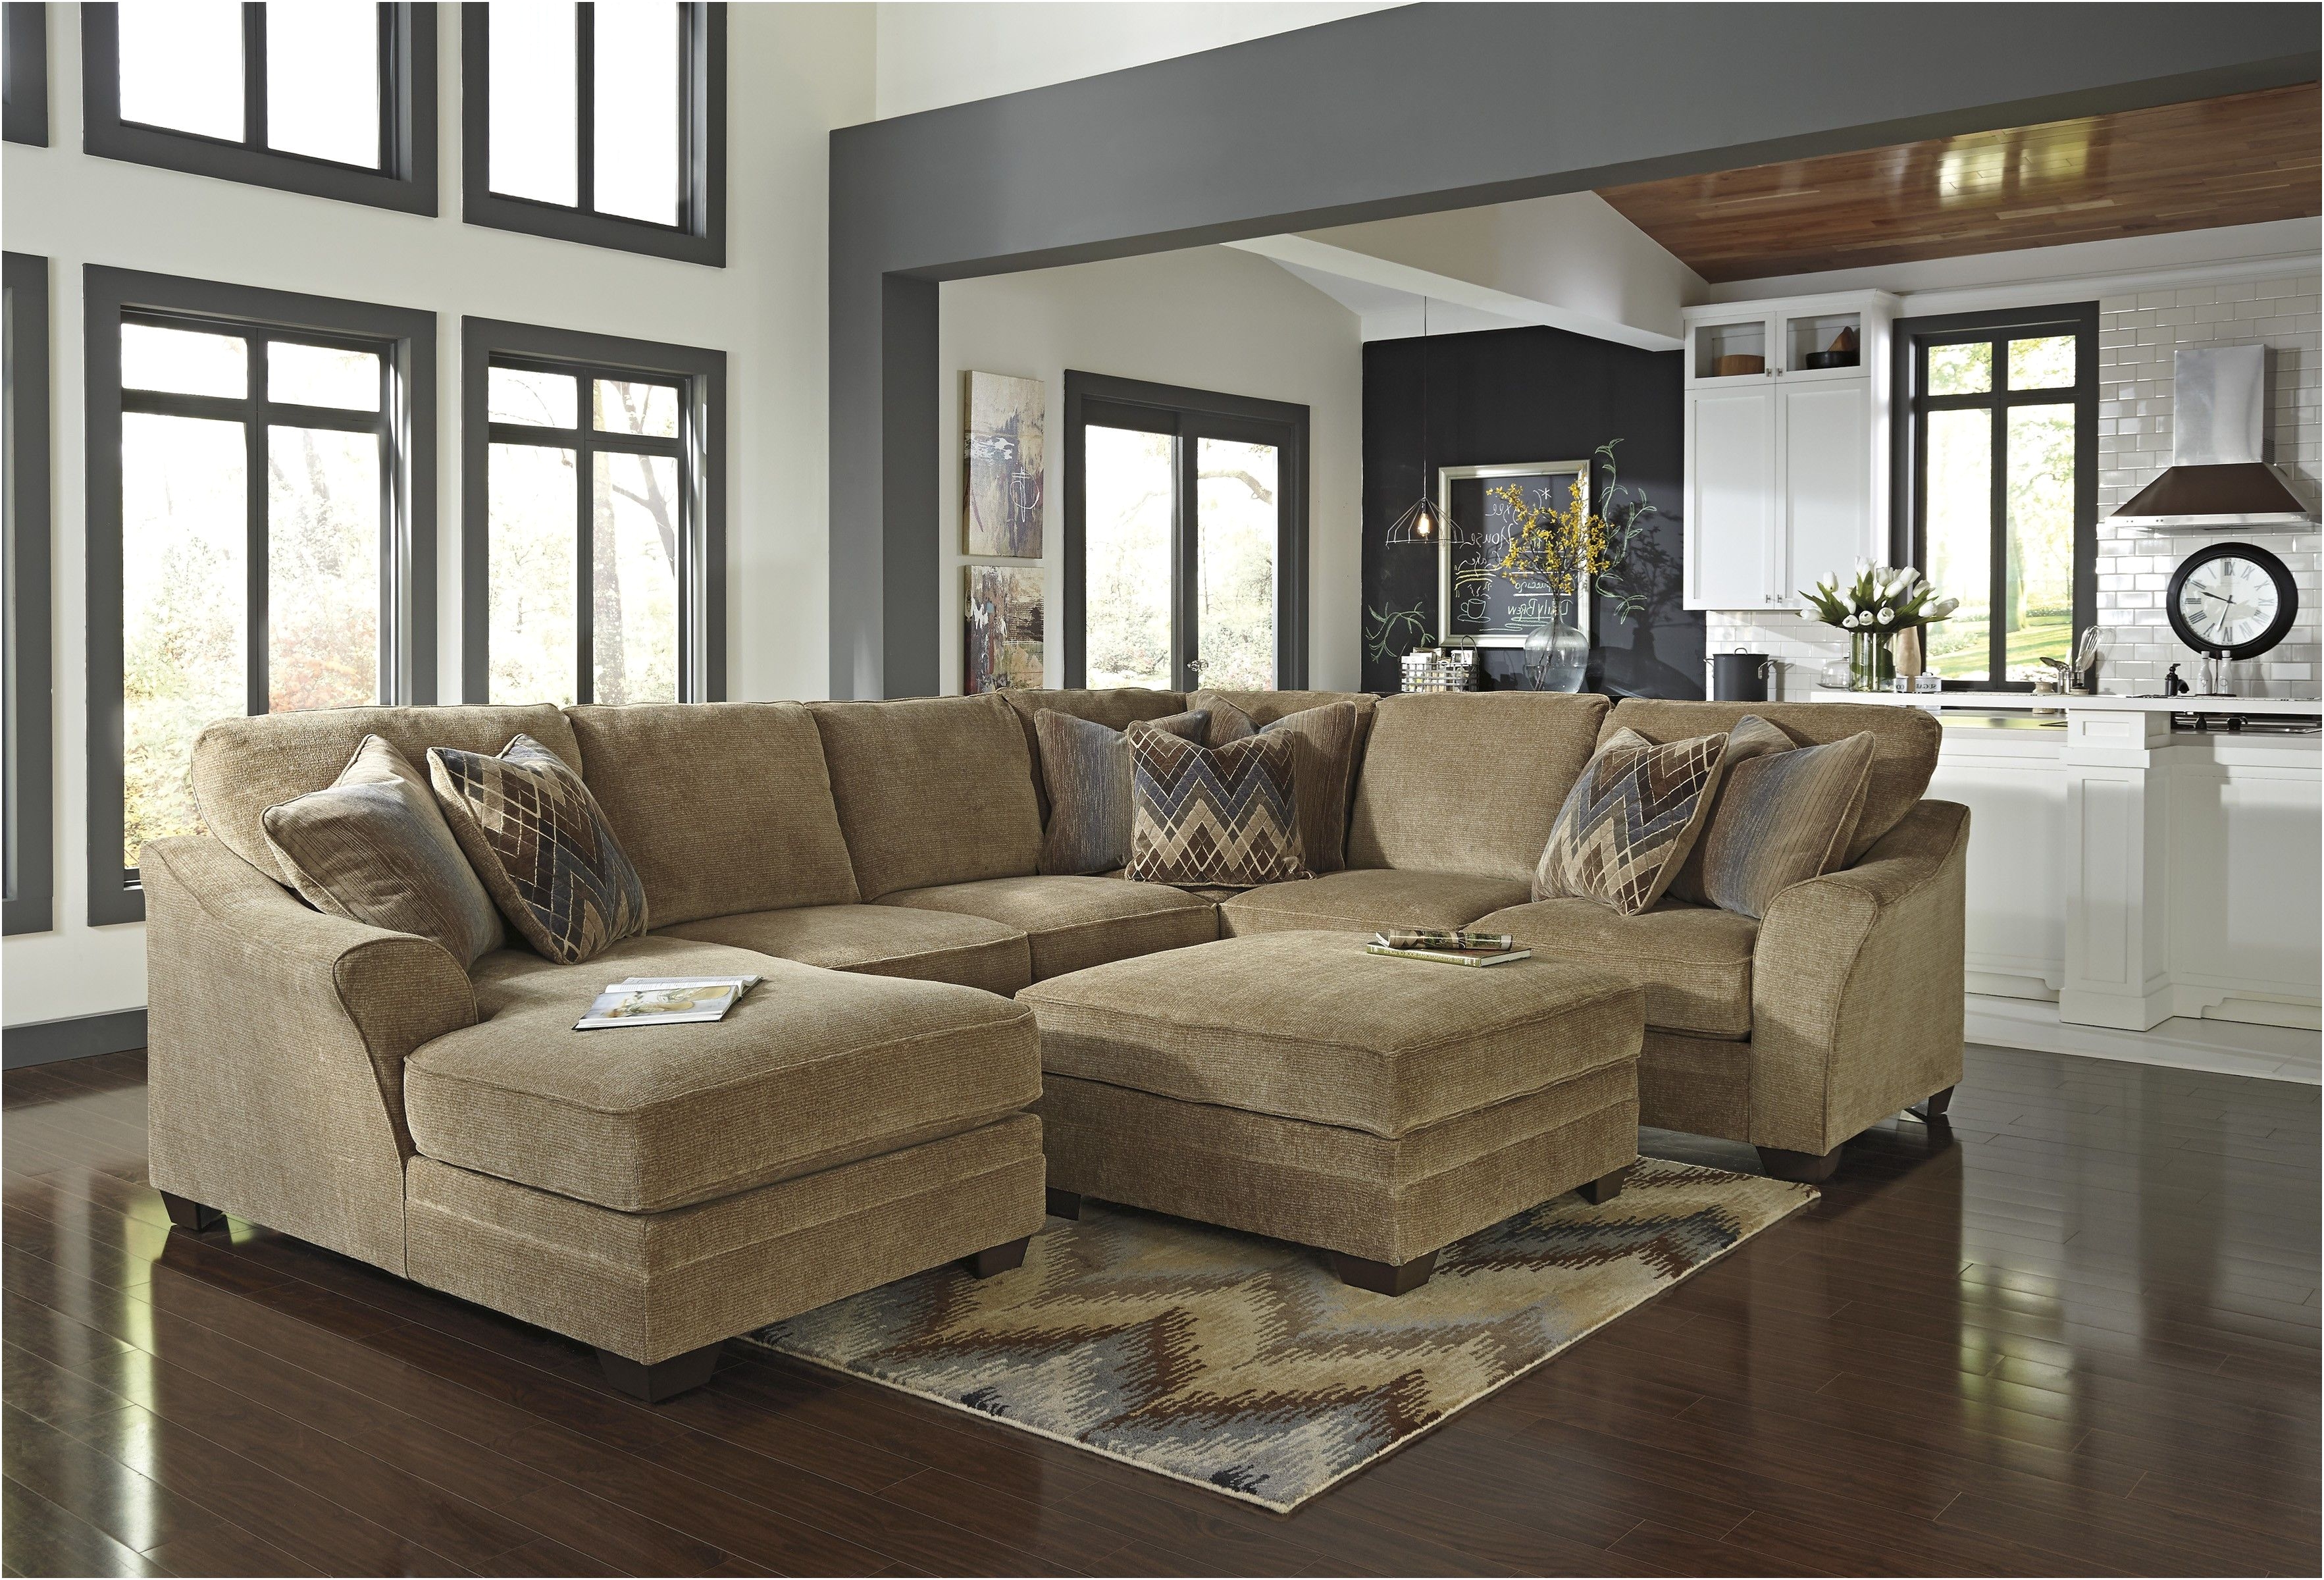 ashley furniture living room furniture living room coolest new living room sets decorating ideas modern